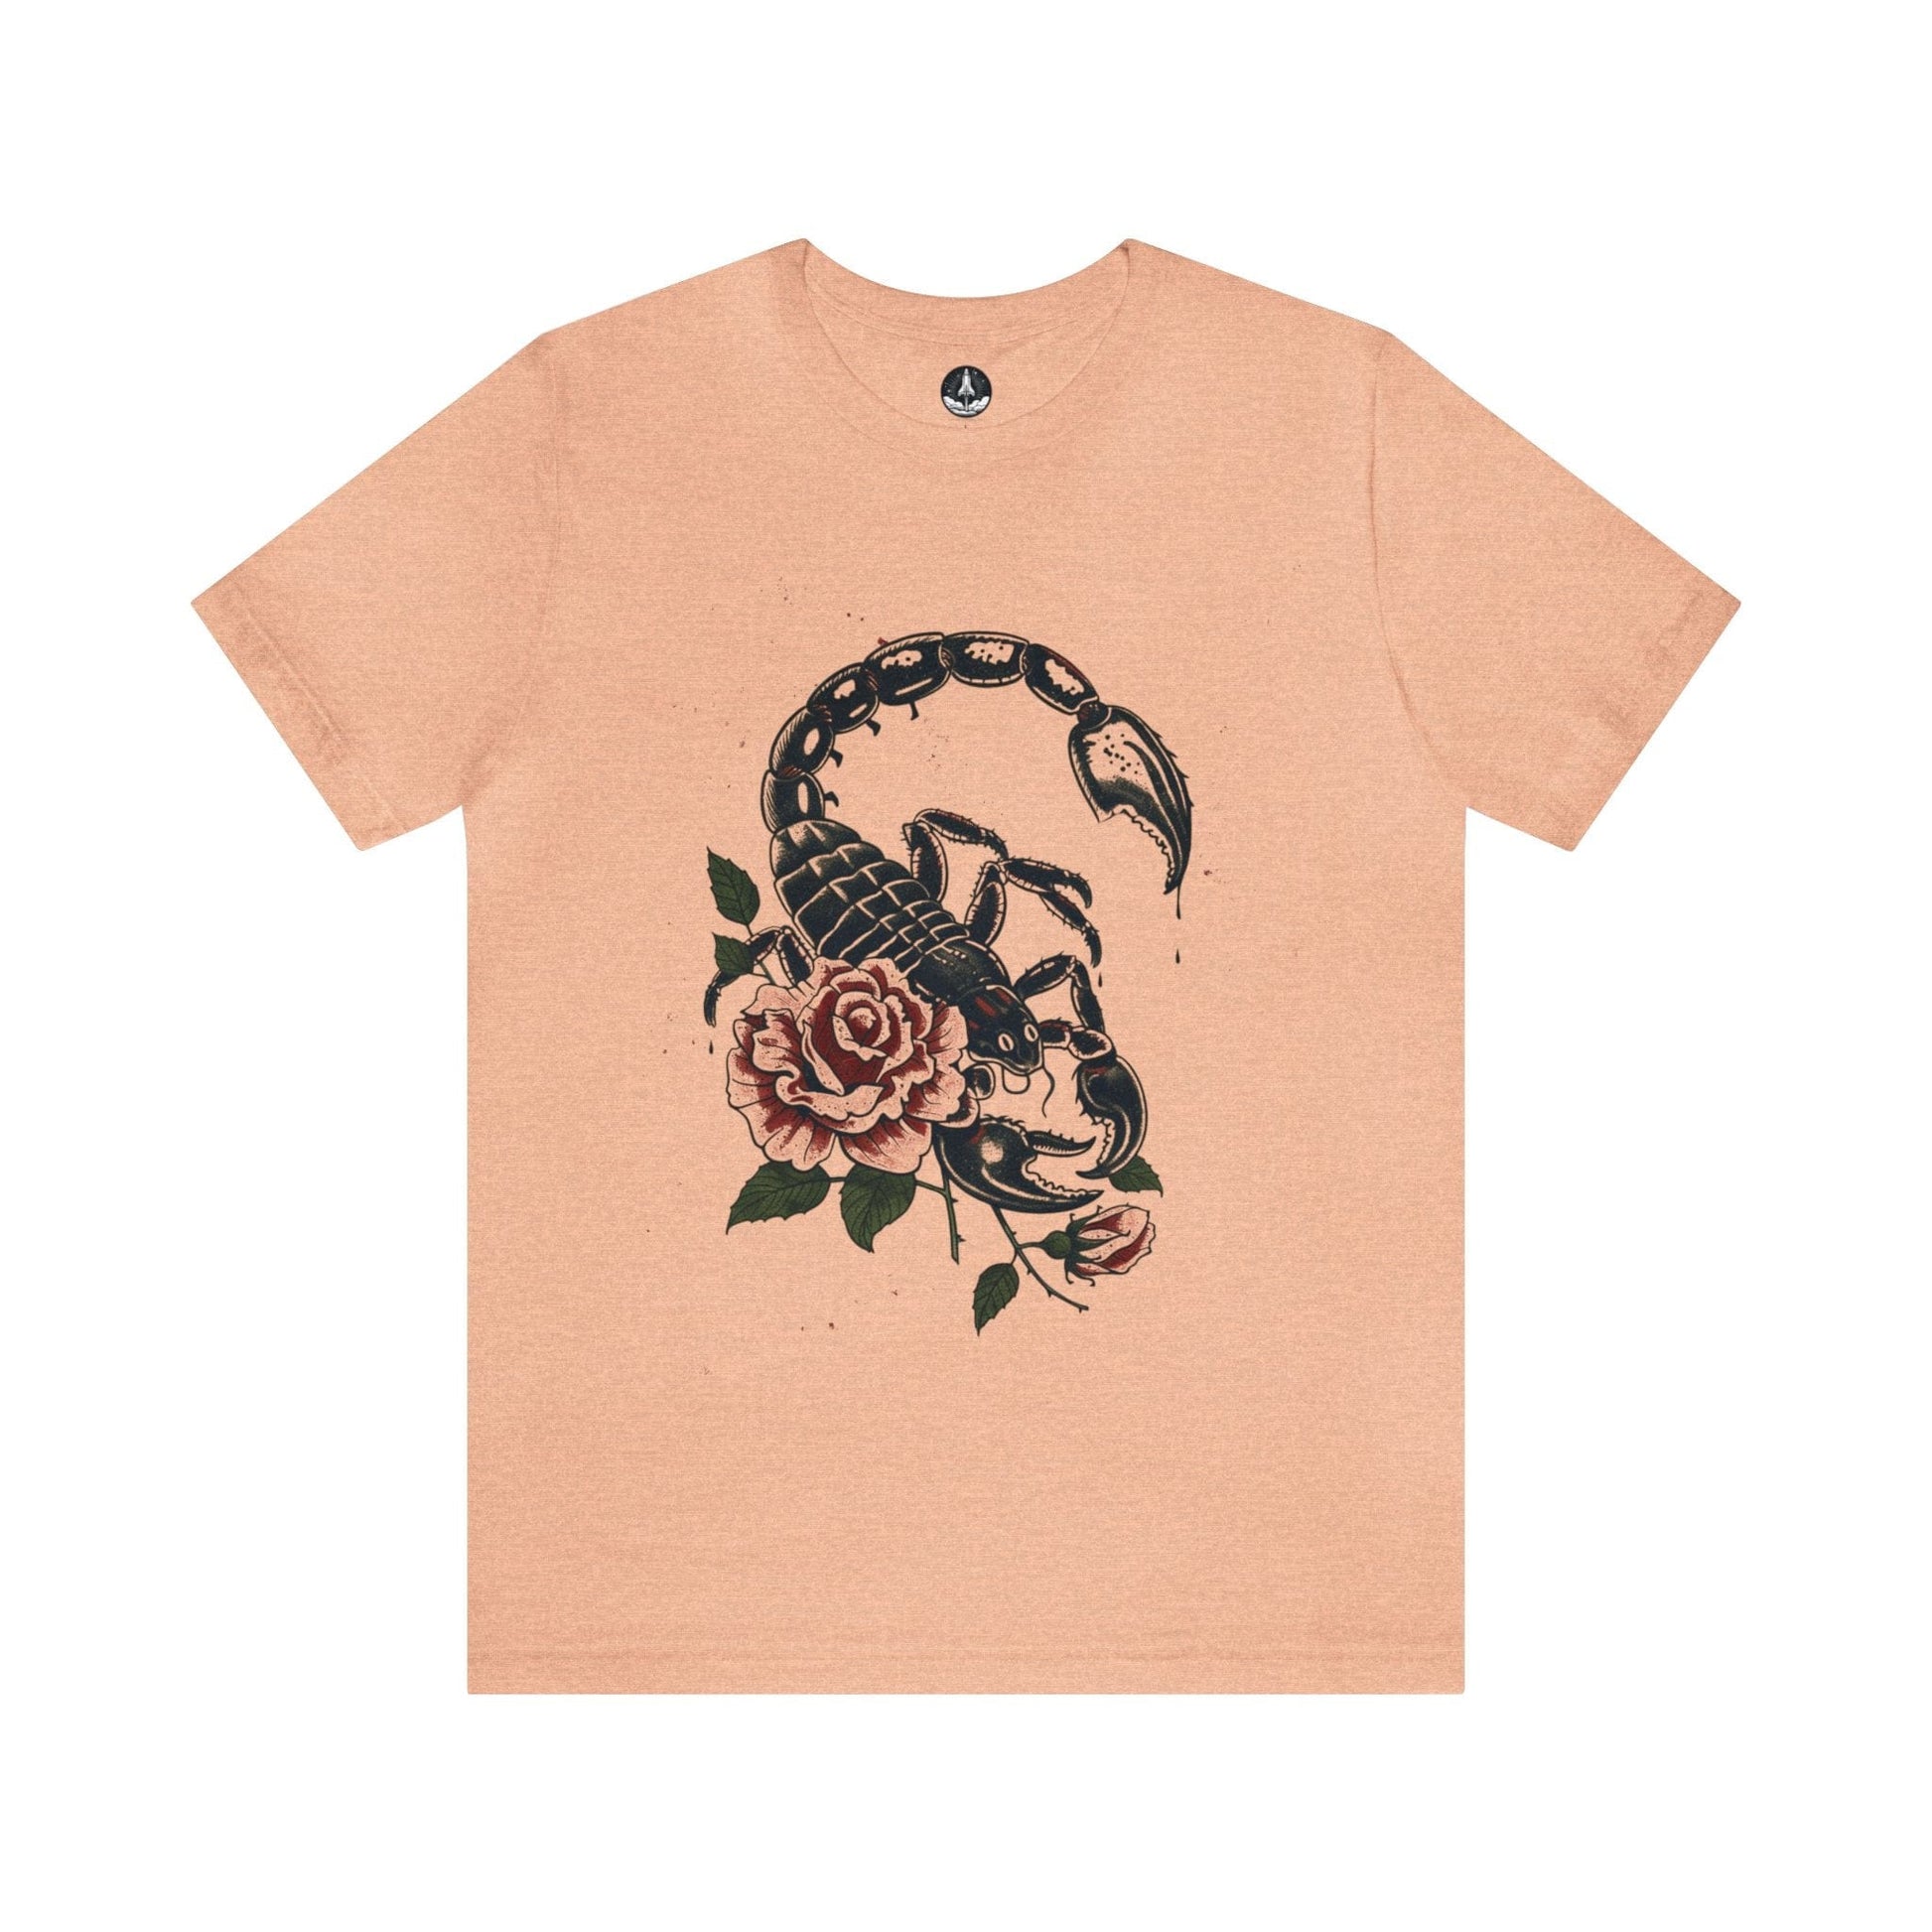 T-Shirt Heather Peach / S Scorpio's Essence TShirt: Mystical Scorpion Art on Soft Cotton